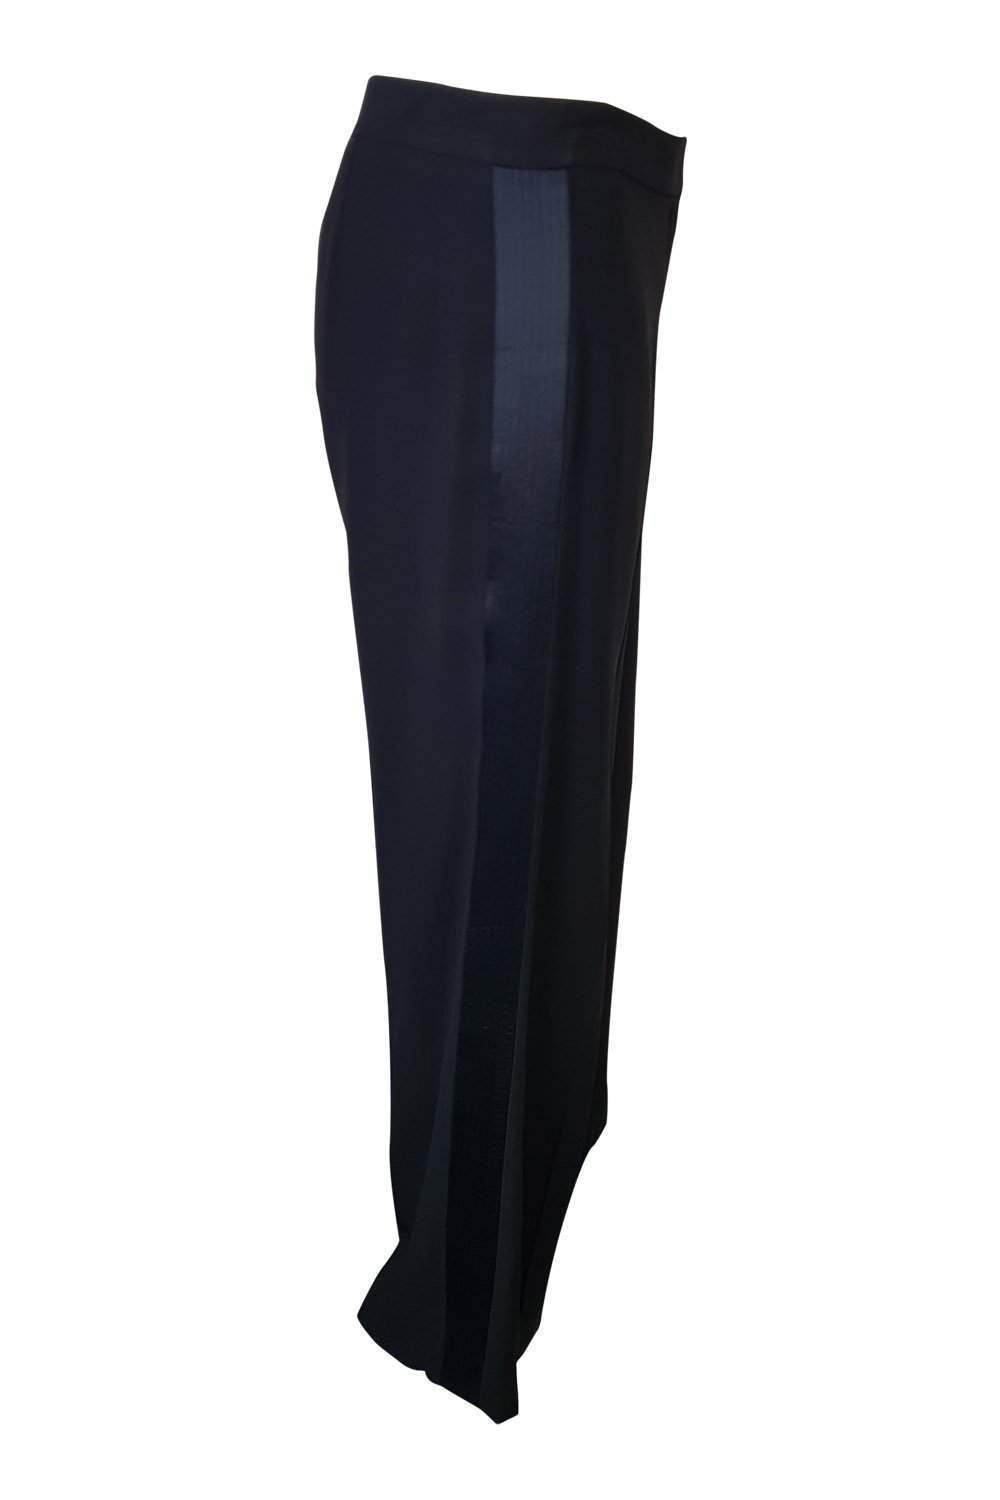 EMPORIO ARMANI Black Tuxedo Style Trousers-Emporio Armani-The Freperie